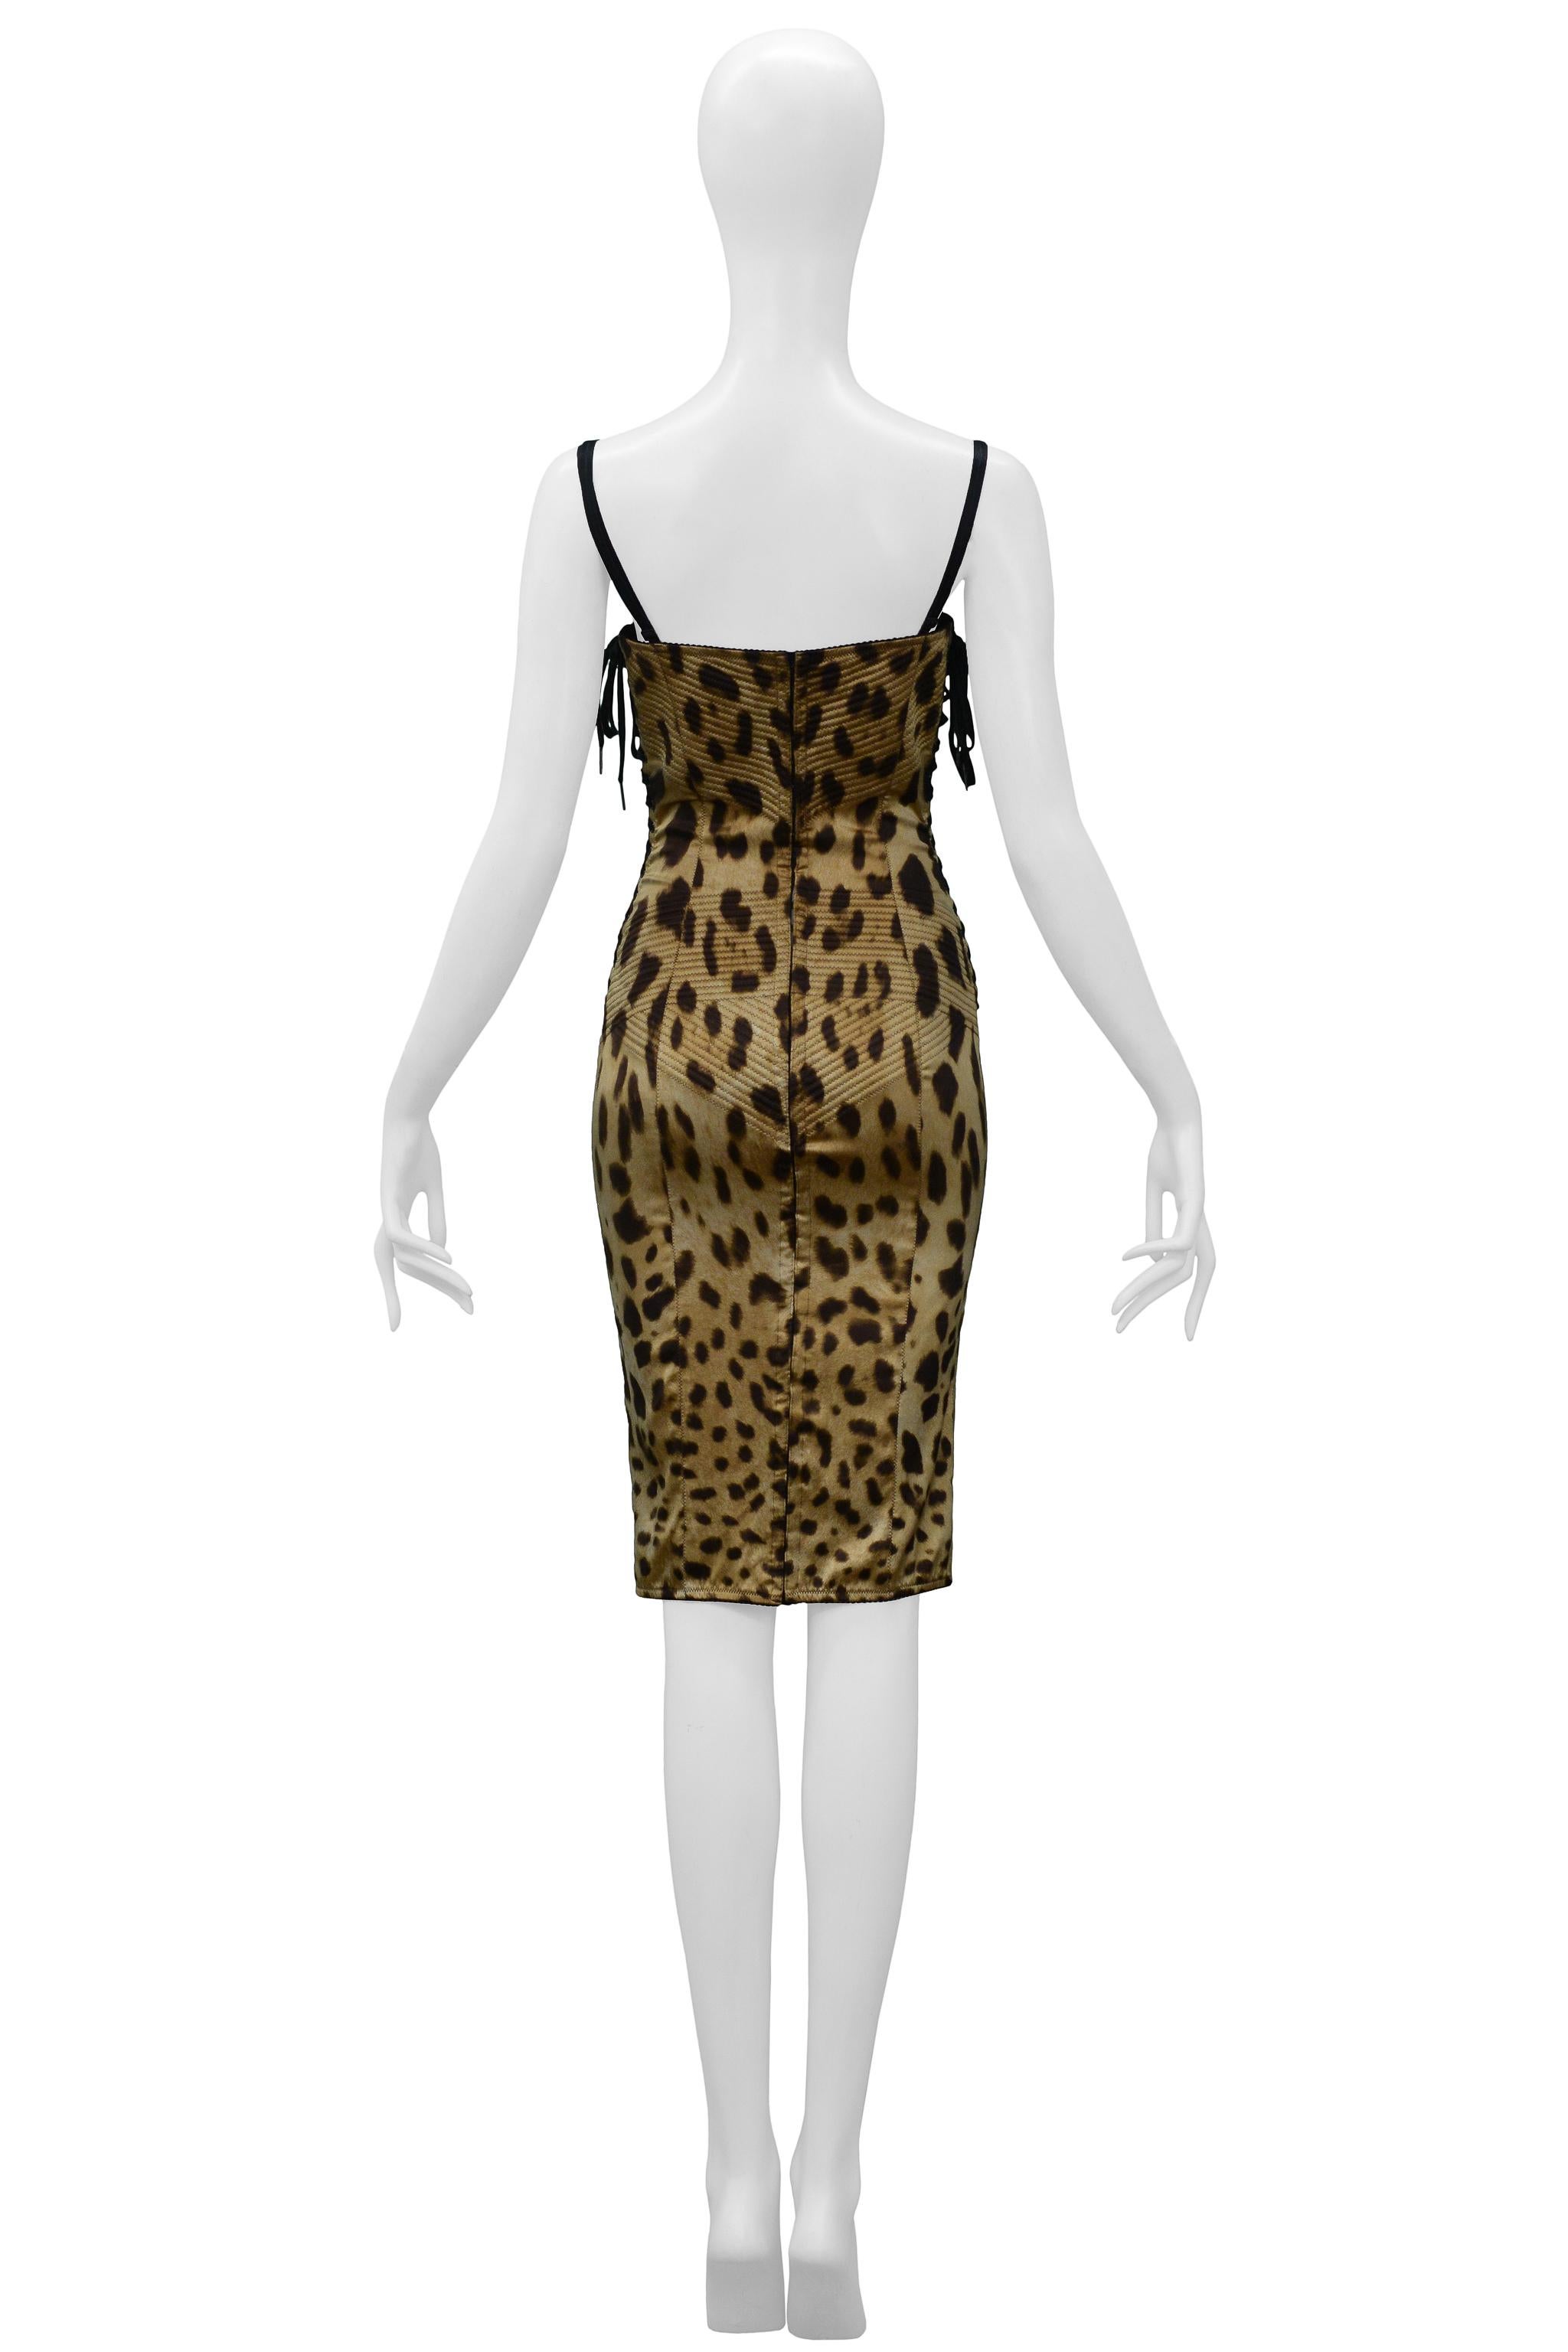 Dolce & Gabbana Satin Leopard Print Corset Bustier Dress For Sale 2